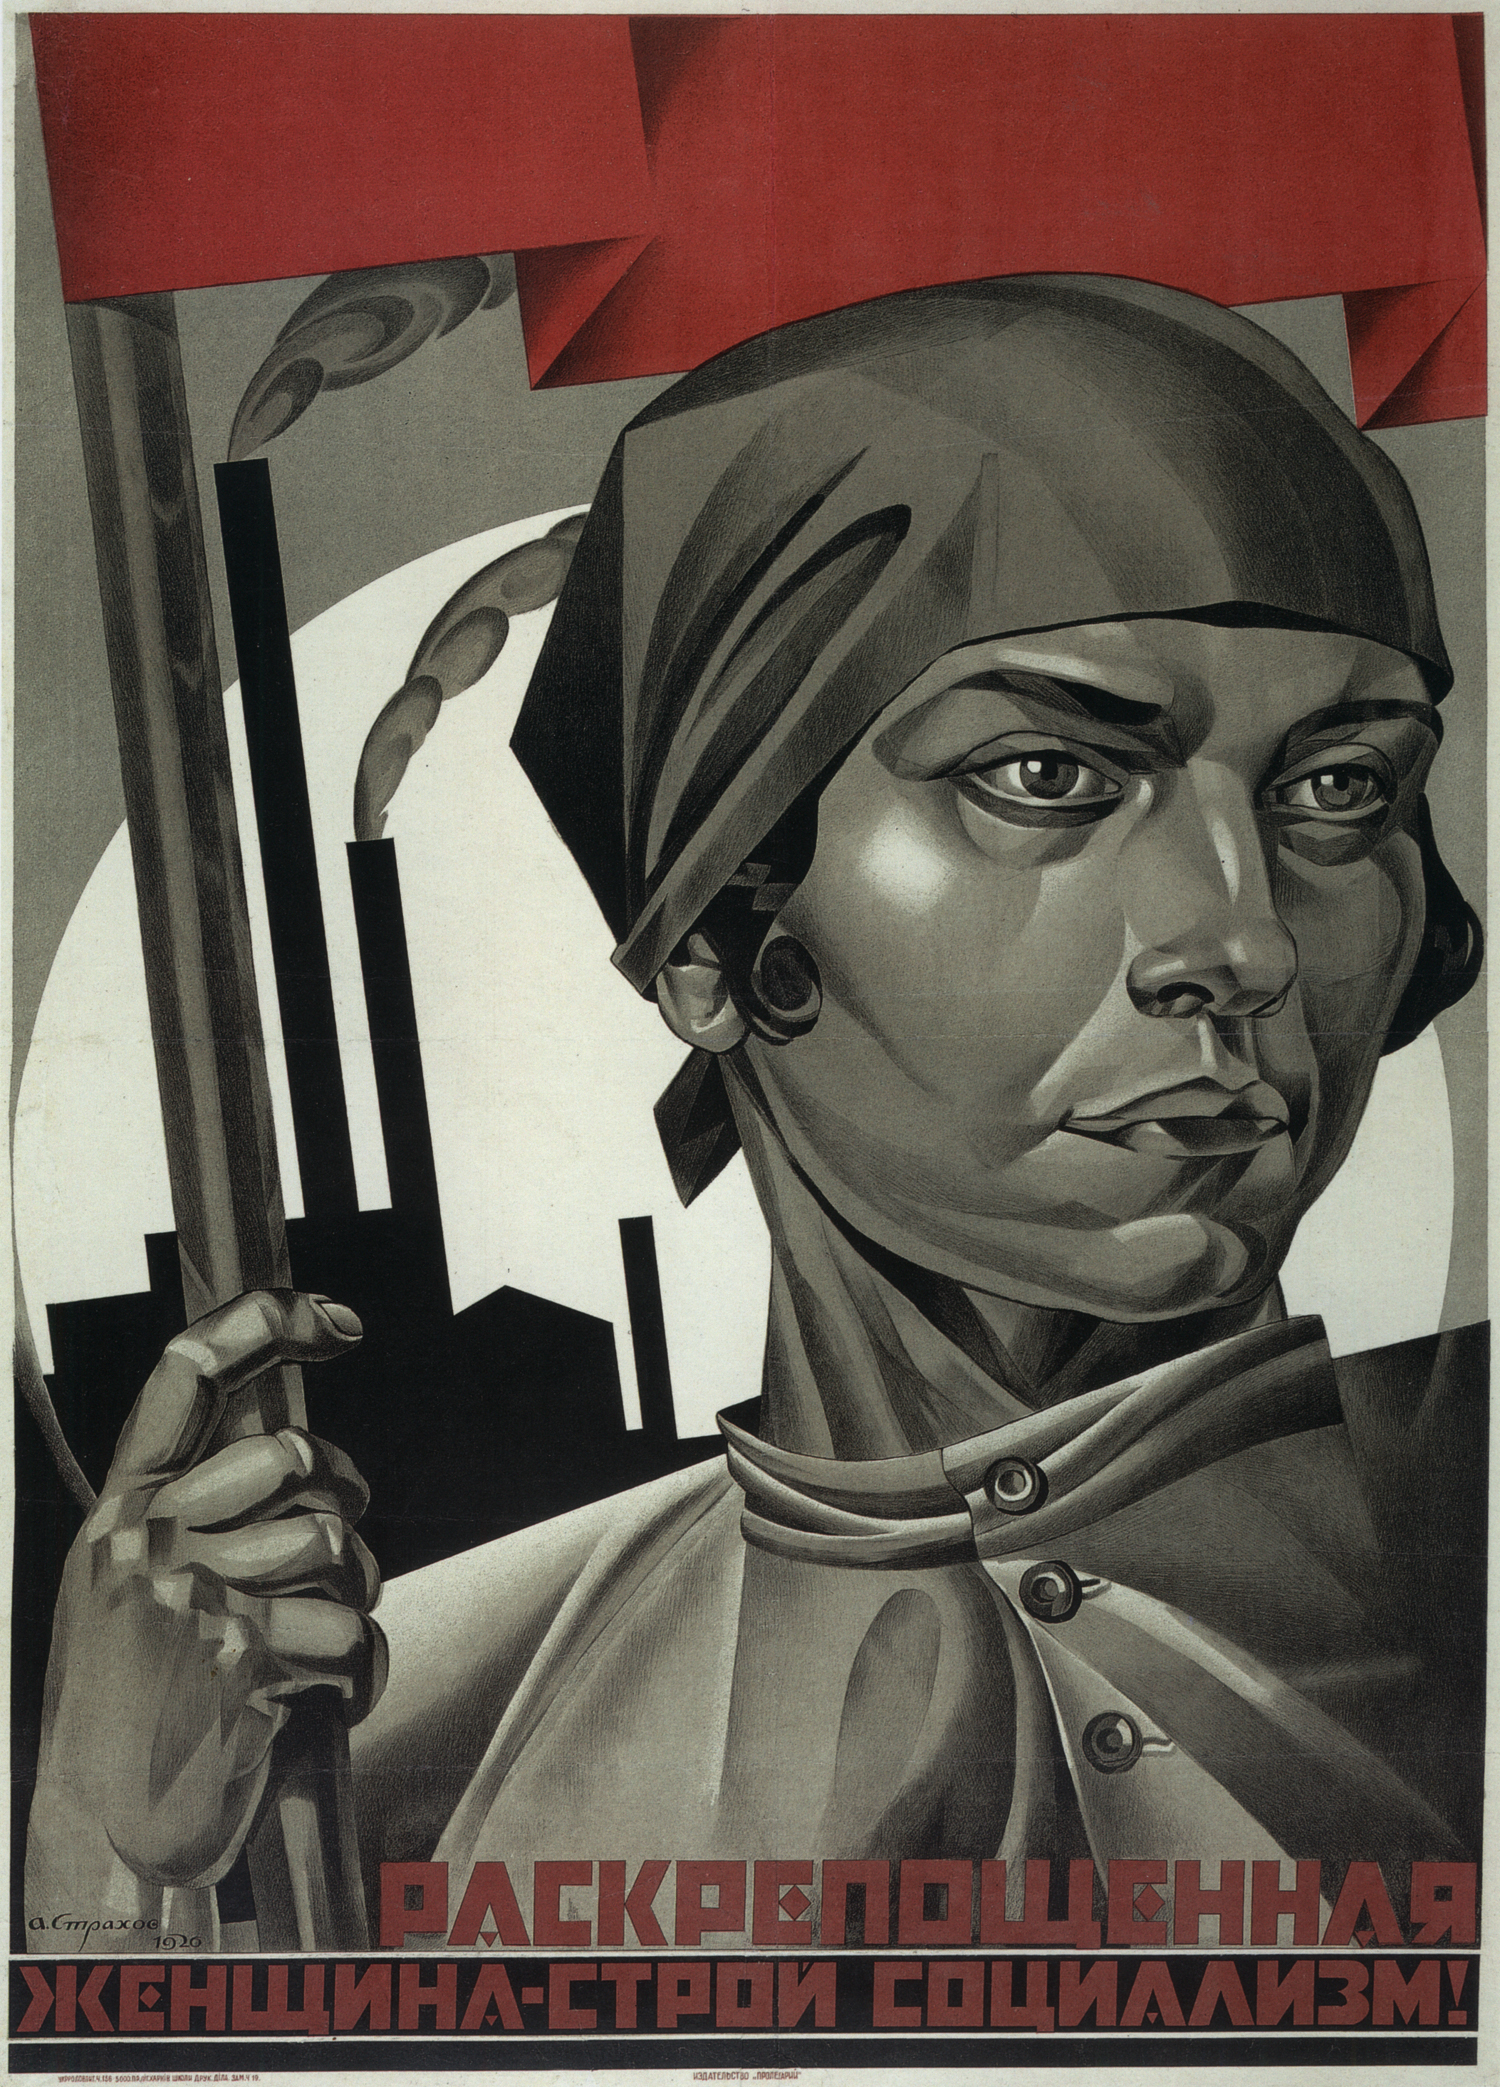 Emancipated Woman: Build Socialism! by Adolf Strakhov - 1926 Tate Modern